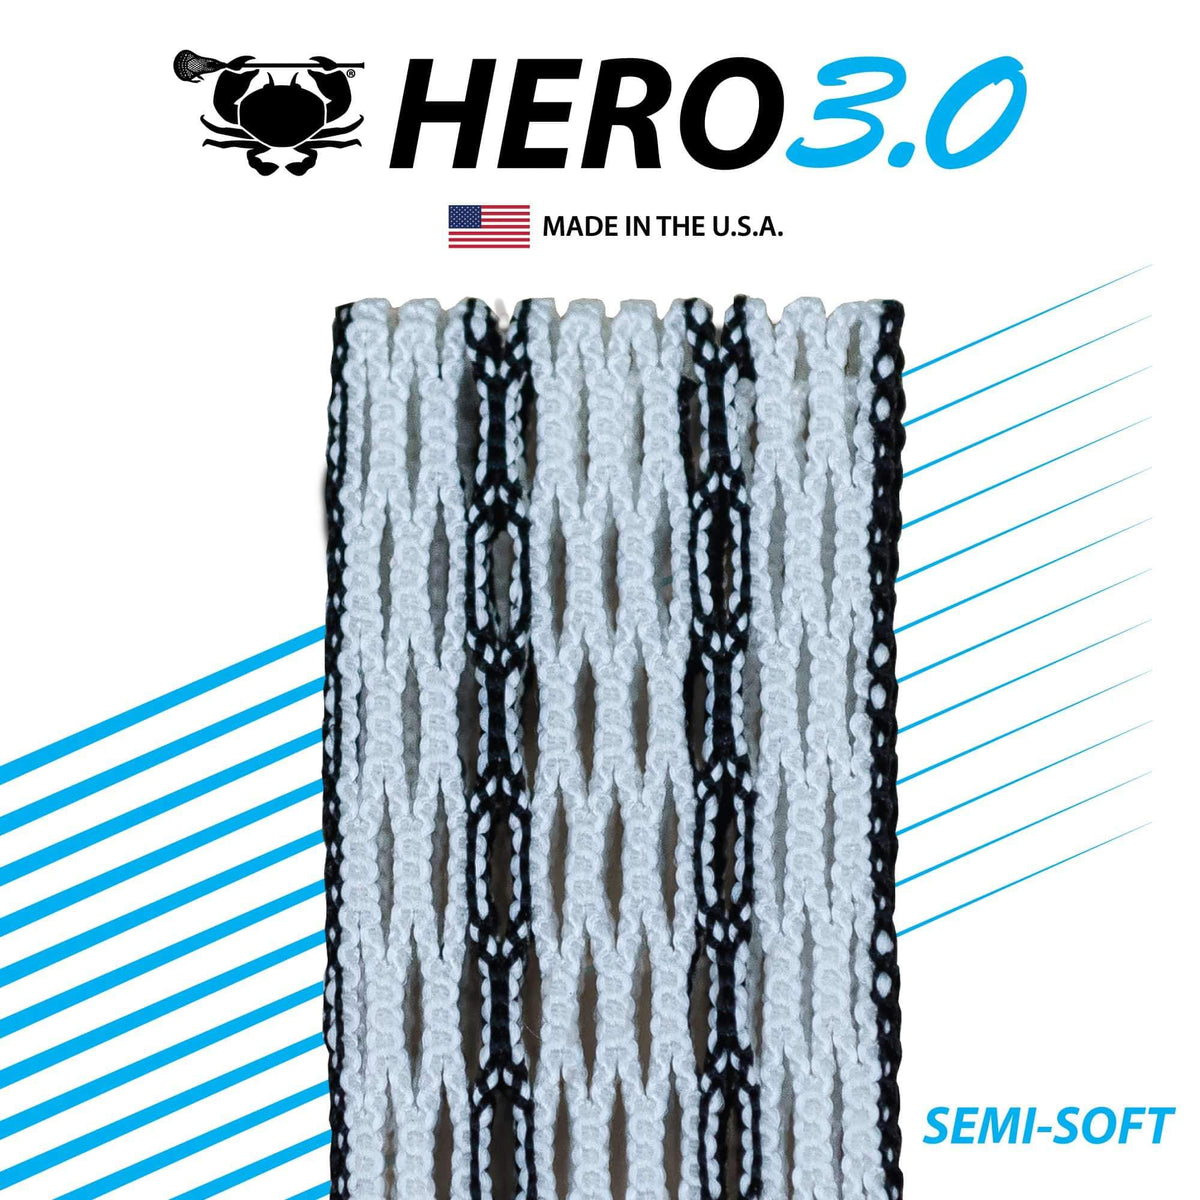 ECD Hero 3.0 Semi-Soft Black Striker Lacrosse Mesh